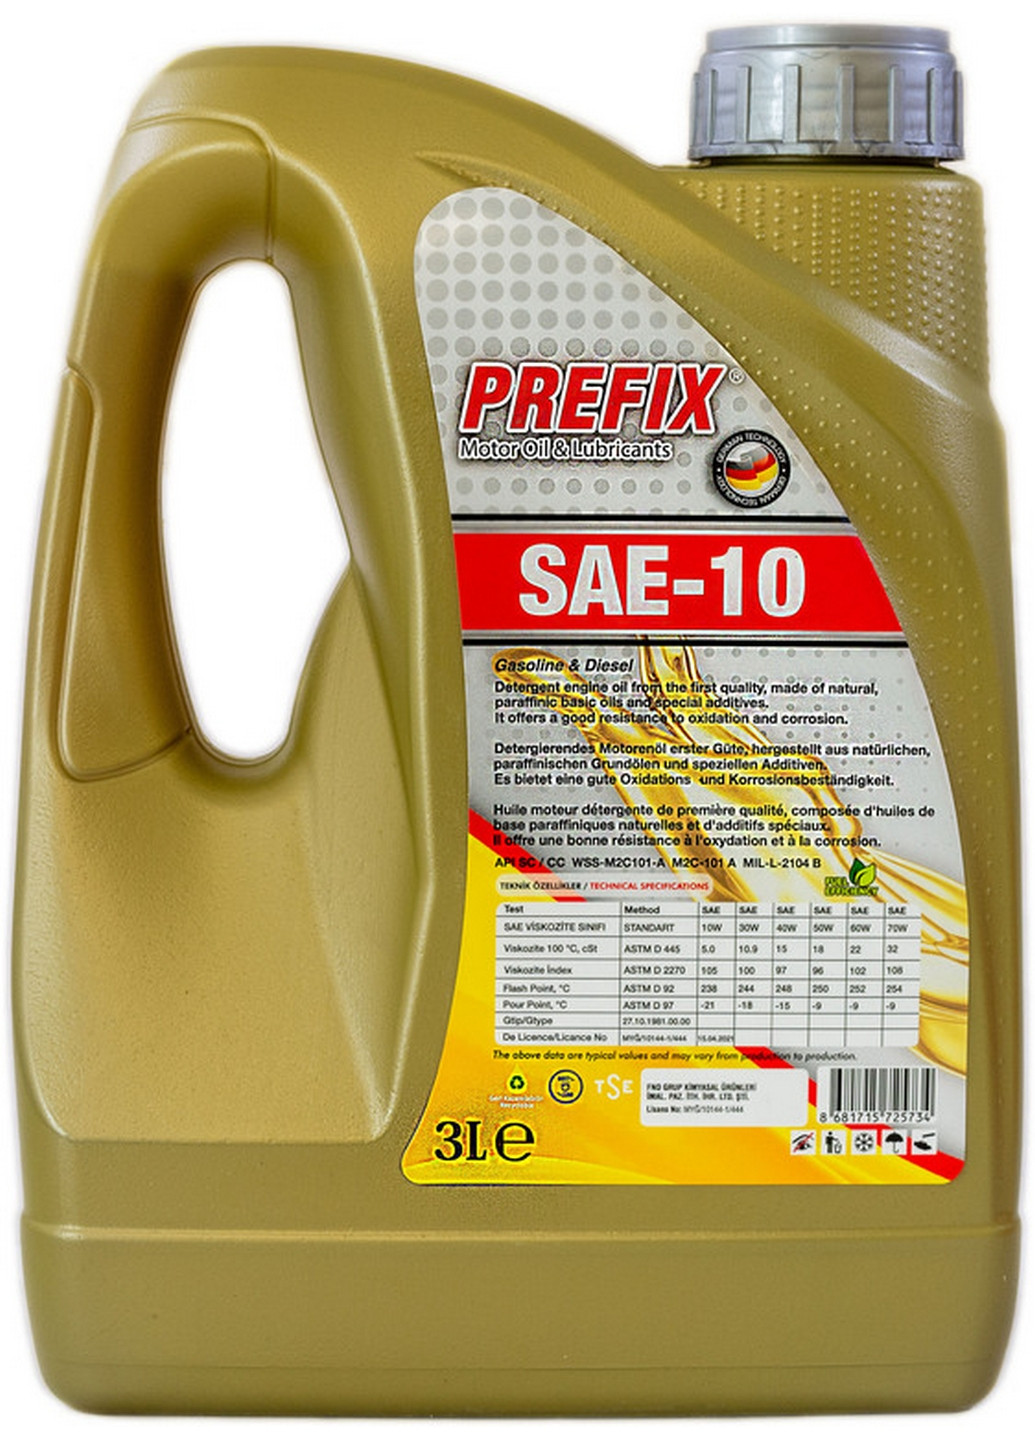 Промивна олія SAE 10 3 л, API SC/CC 9х27х19 см No Brand (263424254)